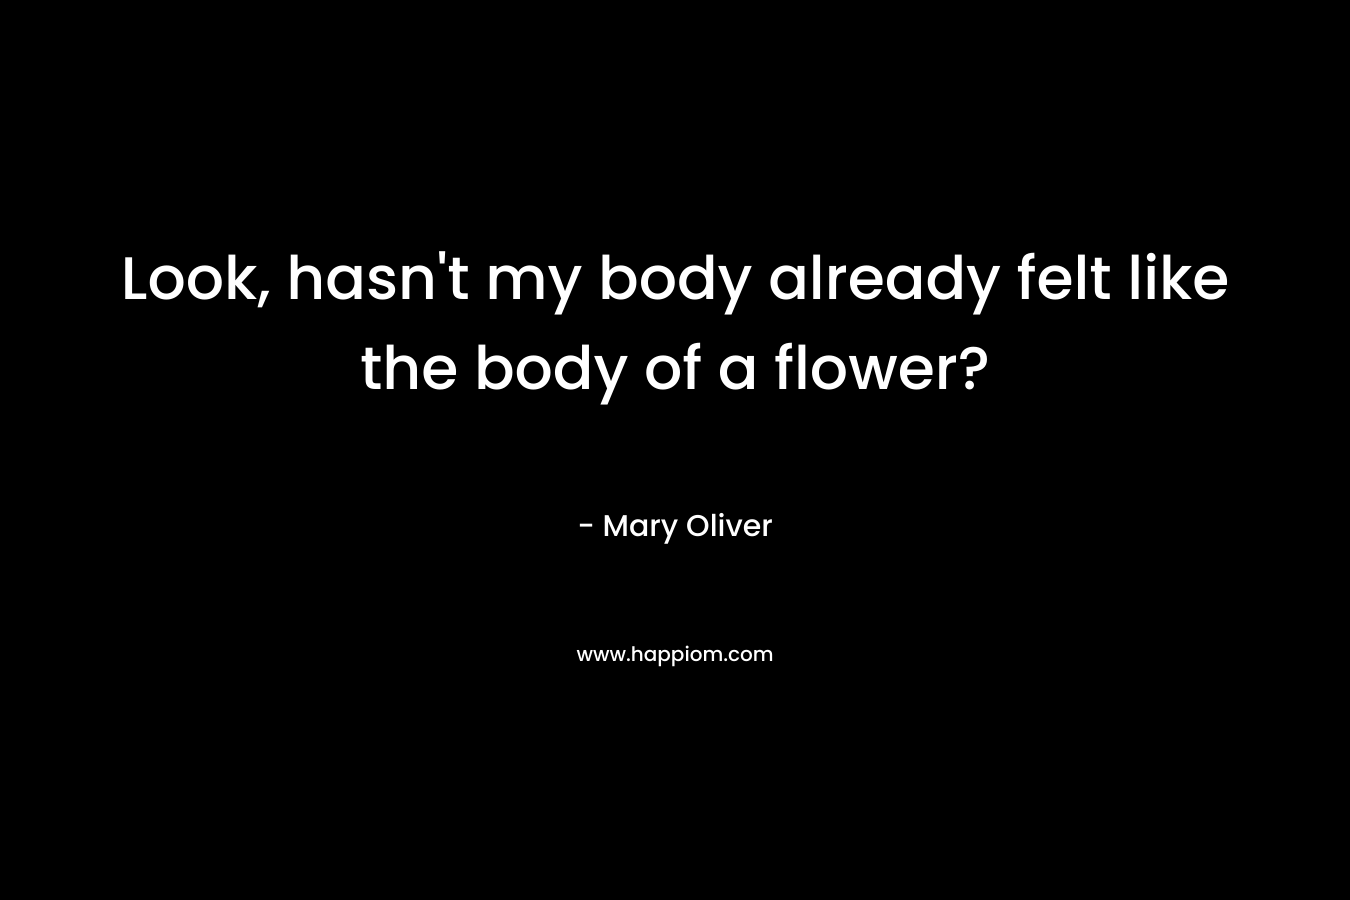 Look, hasn't my body already felt like the body of a flower?